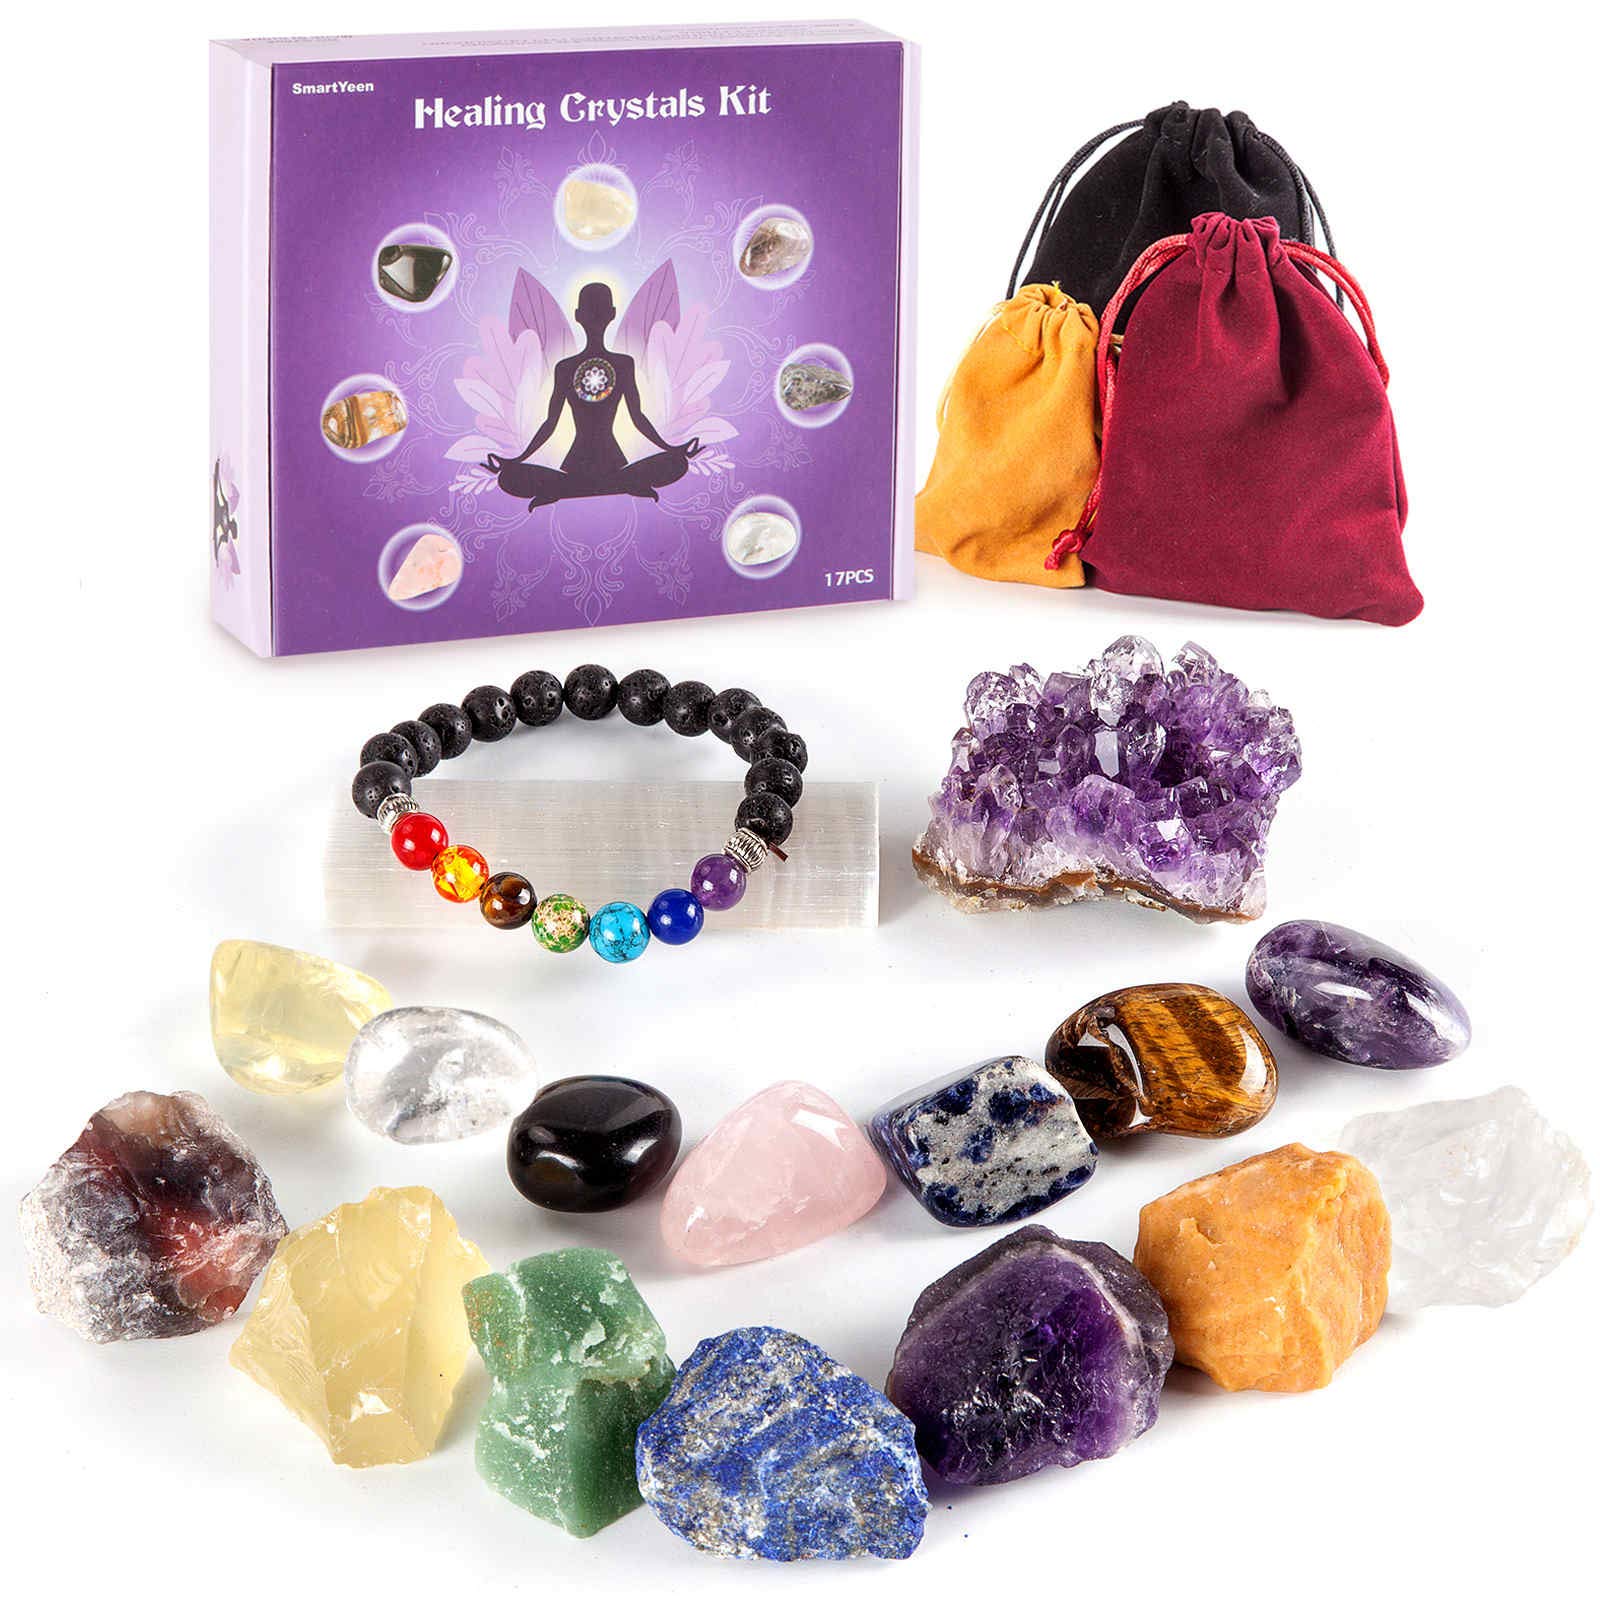 SmartYeen Healing Crystals Set,17PCS Crystal Healing Stones Kit